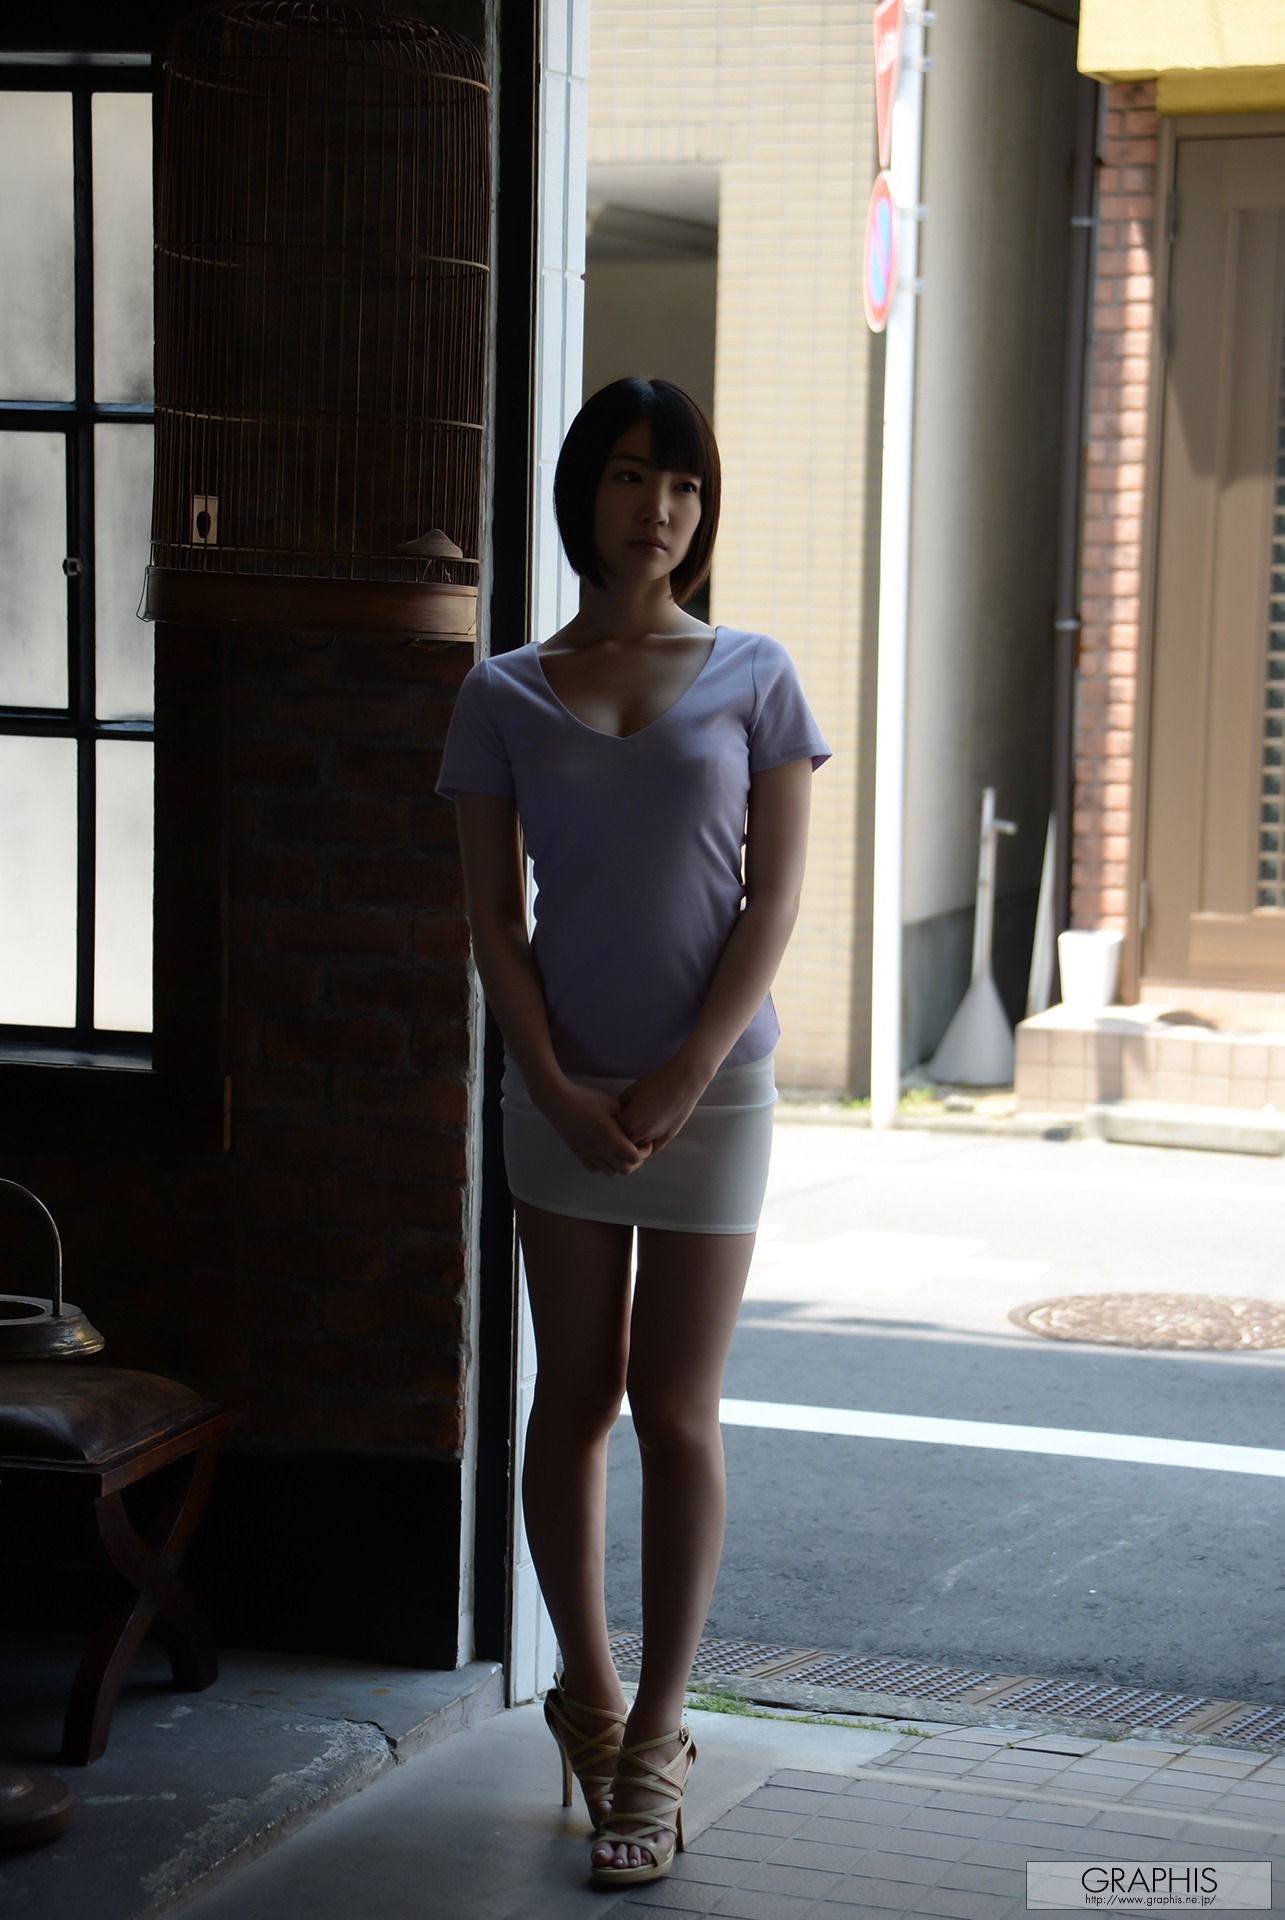 Koharu Suzuki Graphis Limited Edition Share Erotic Asian Girl Picture Livestream